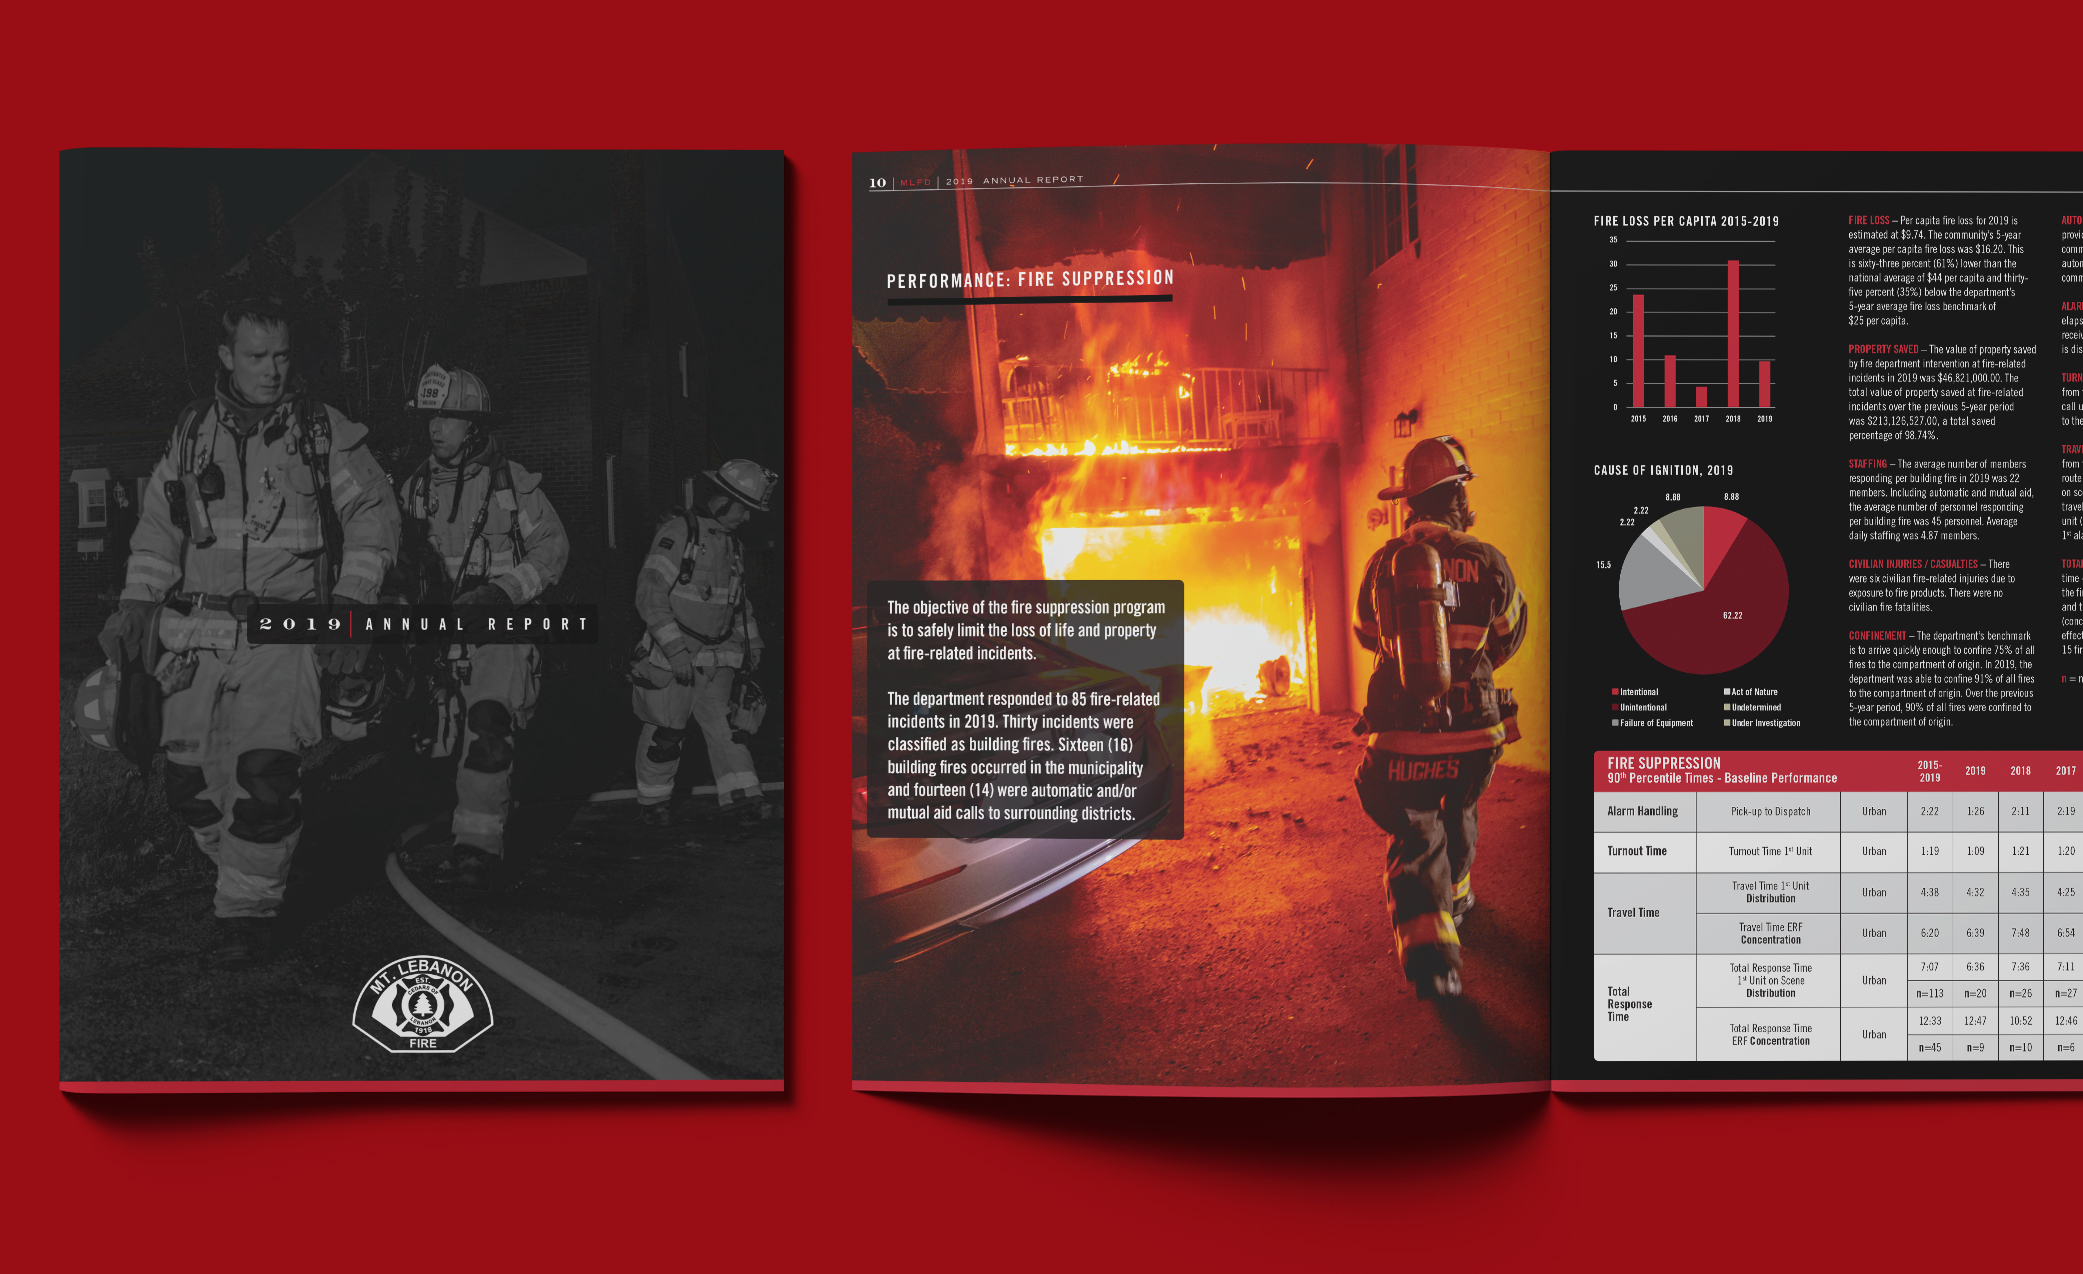 Mount Lebanon Fire Department brand communications